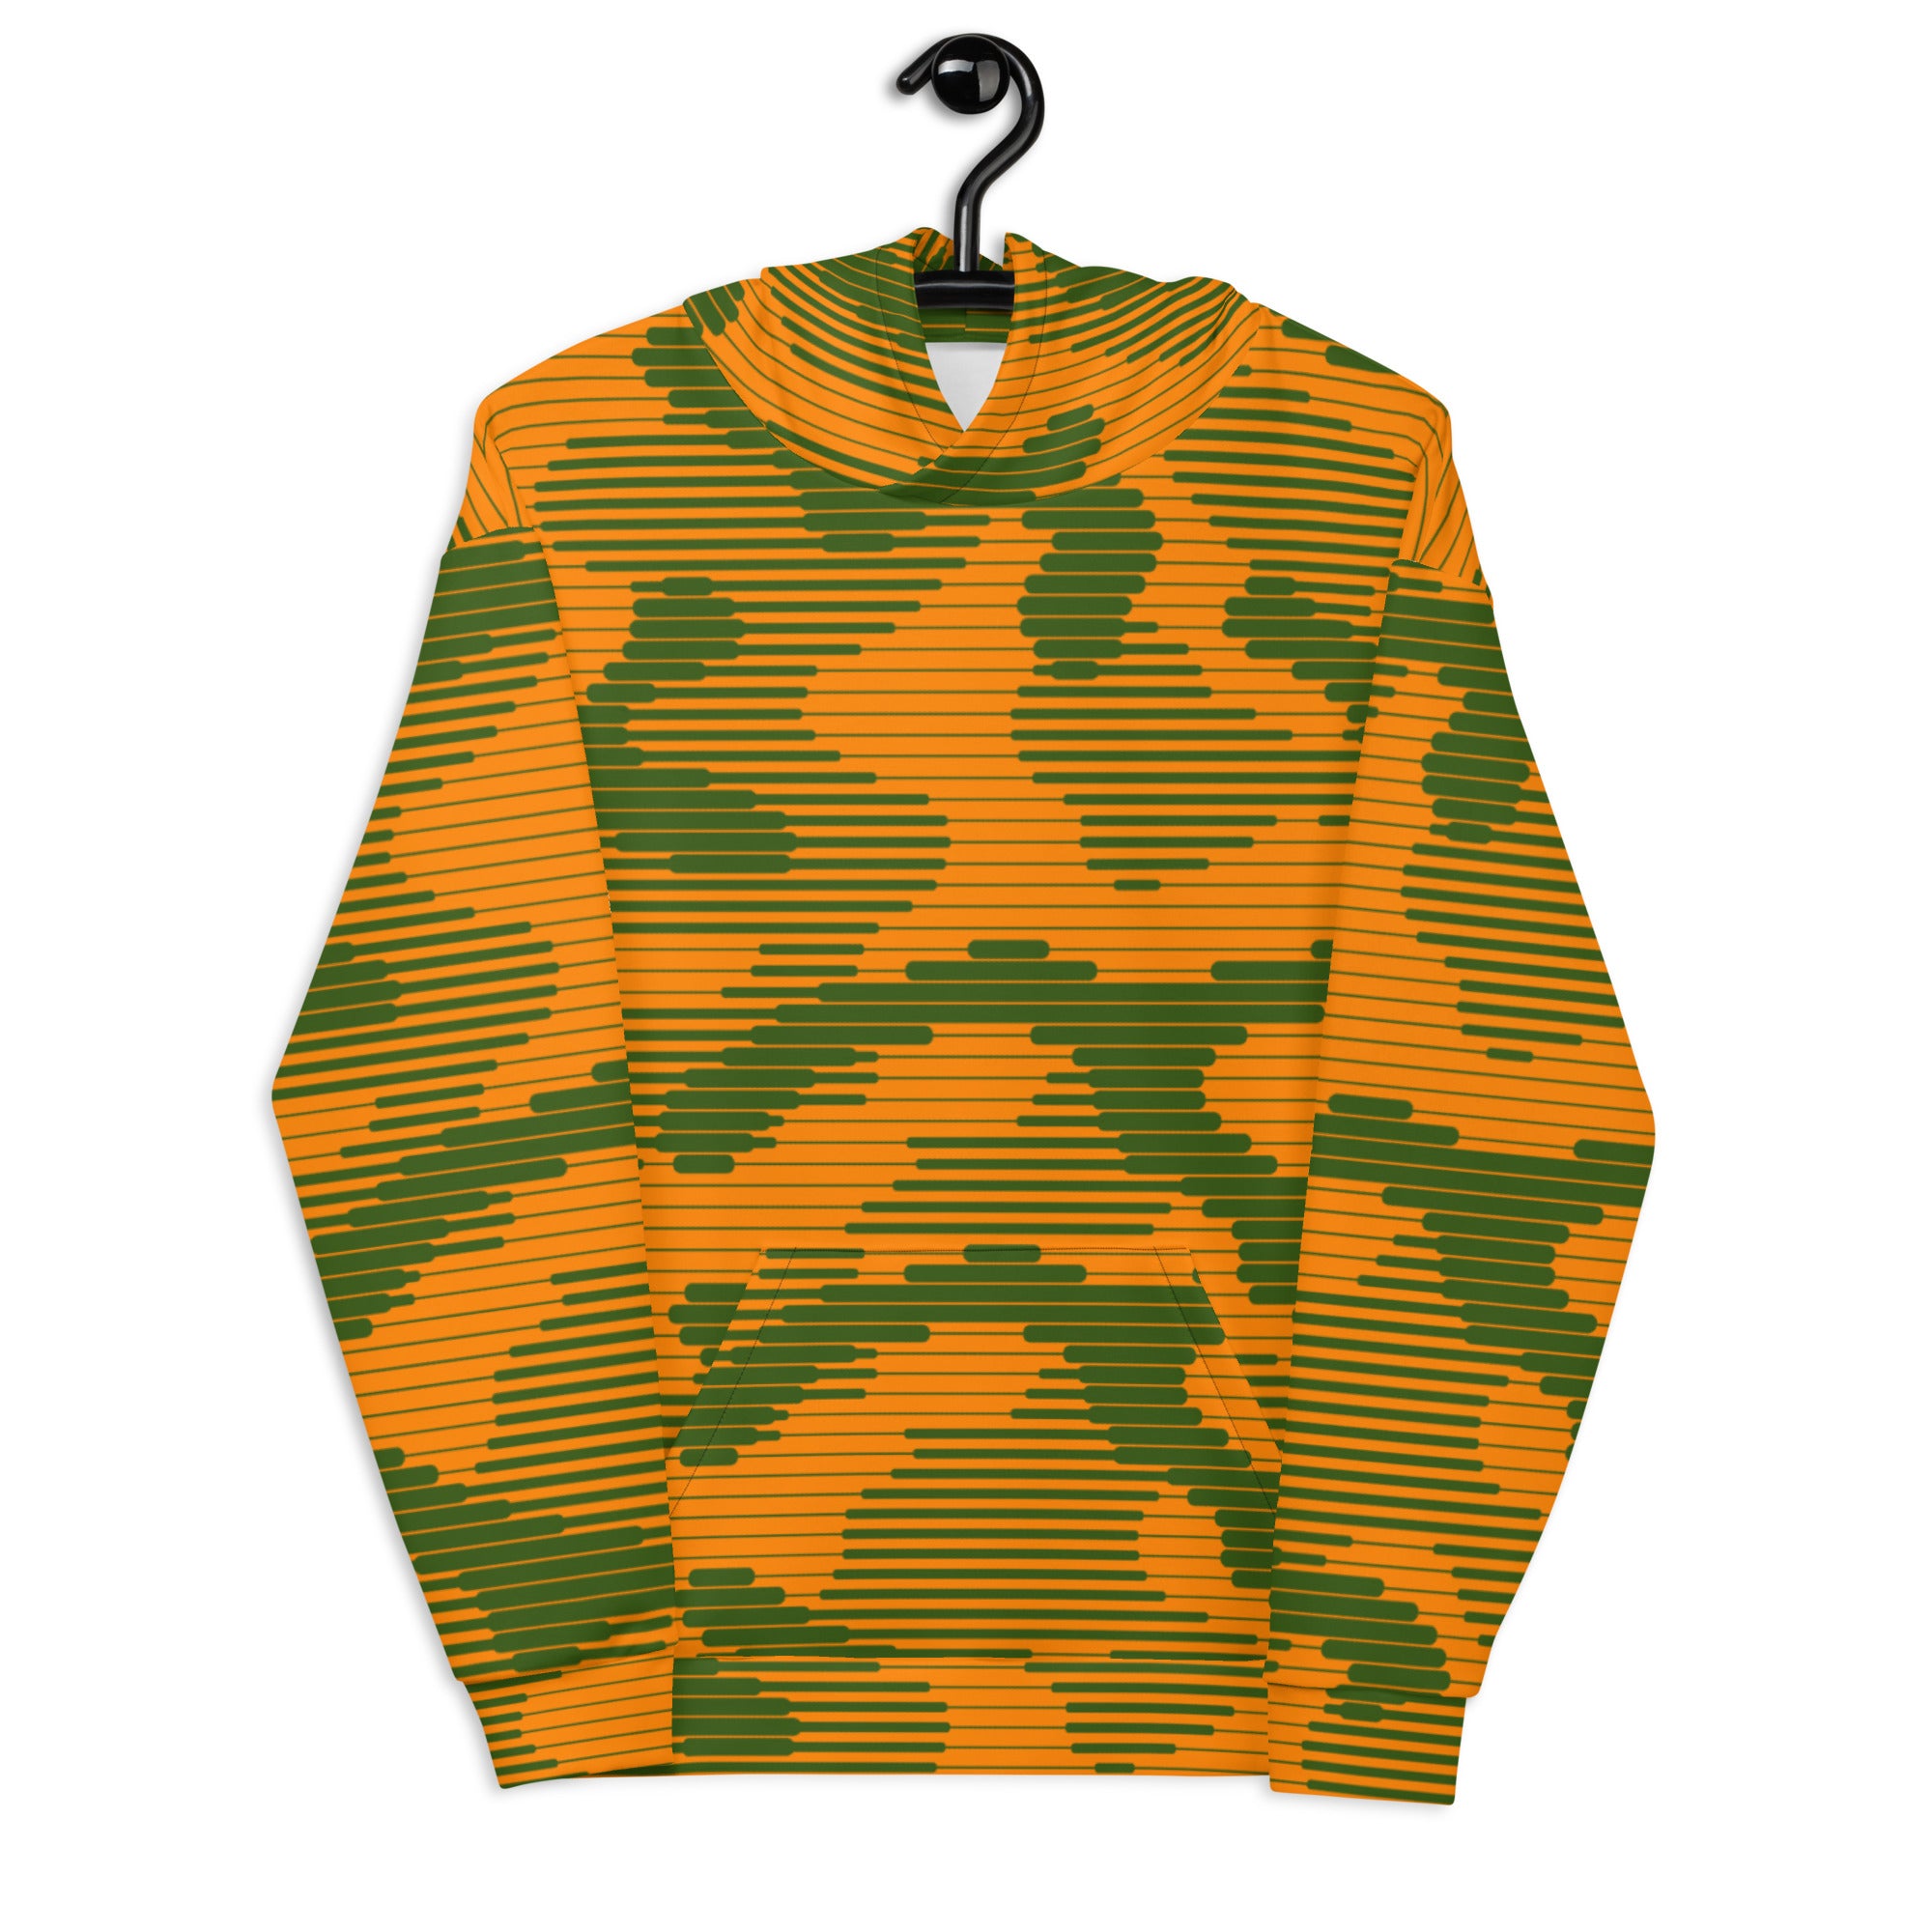 Digital Camouflage Blaze Orange Hoodie